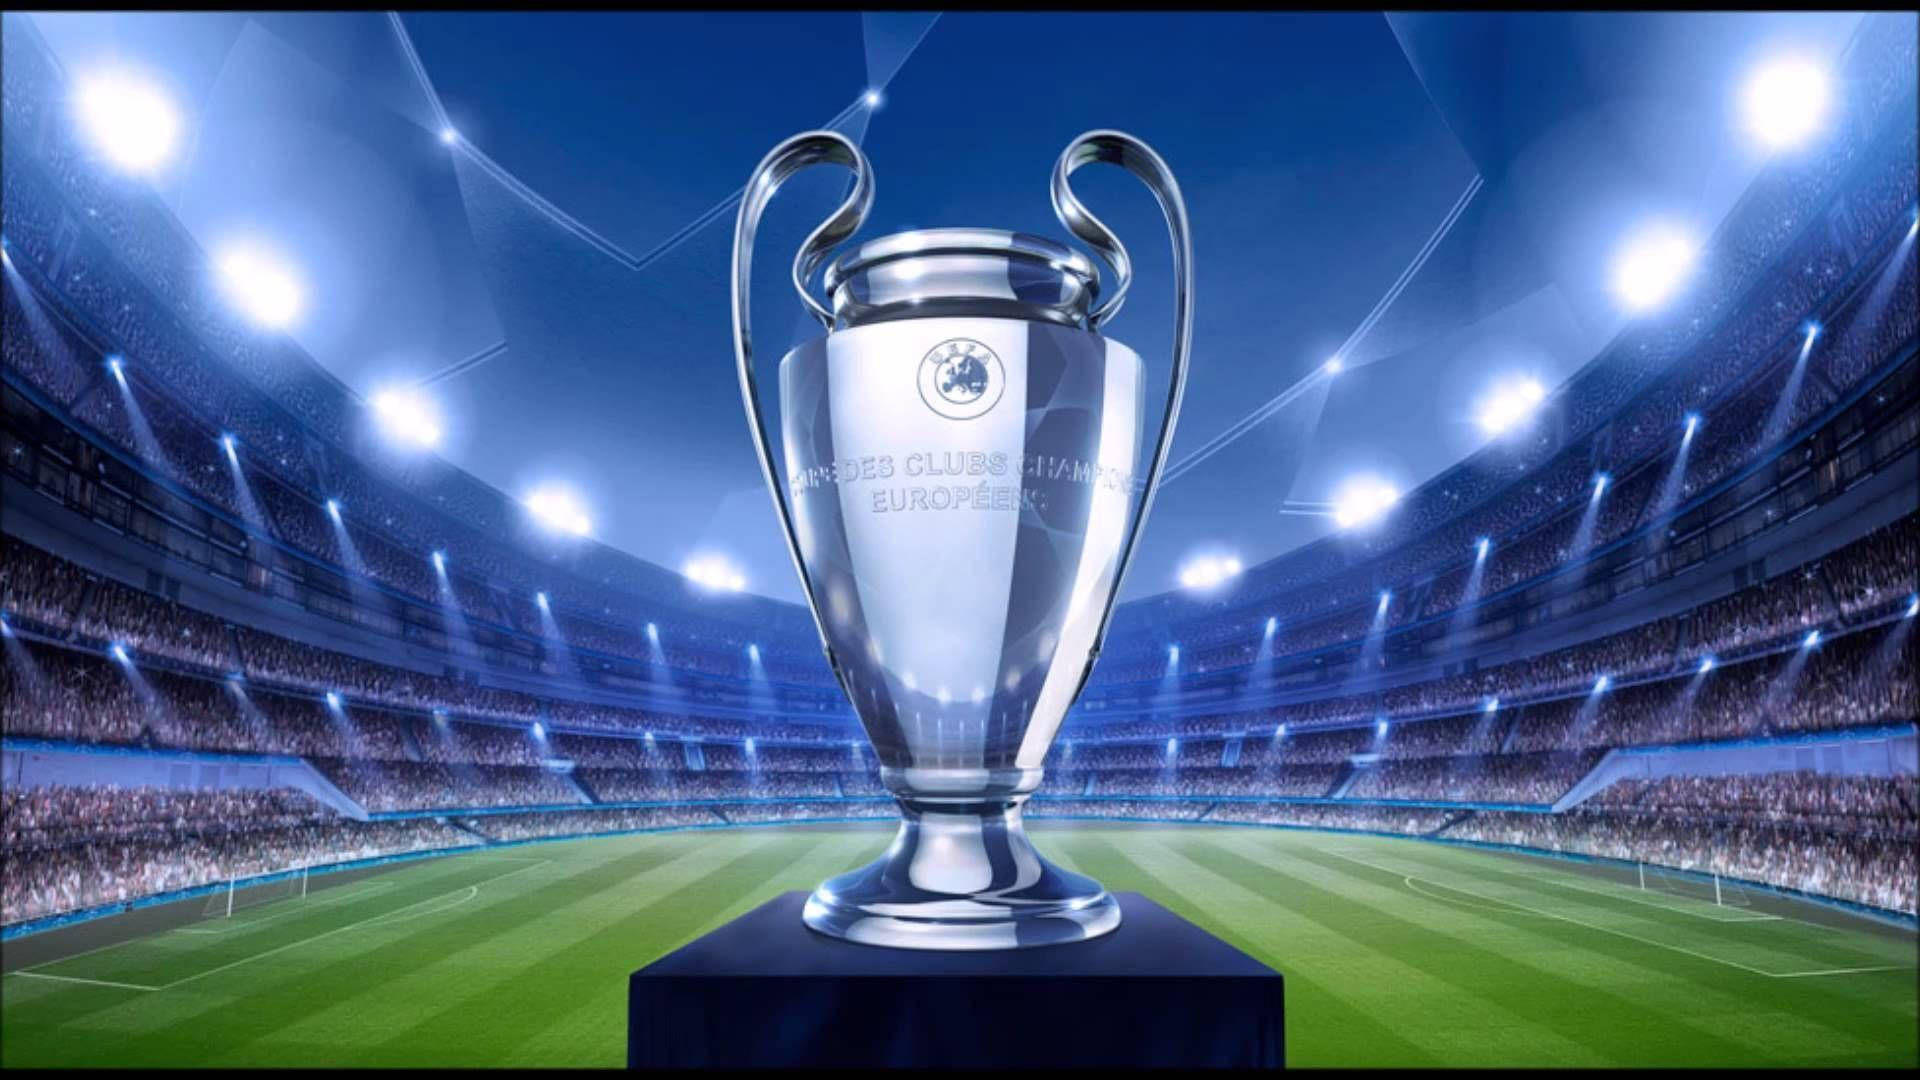 Uefa Champions League European Football Trophy Wallpaper